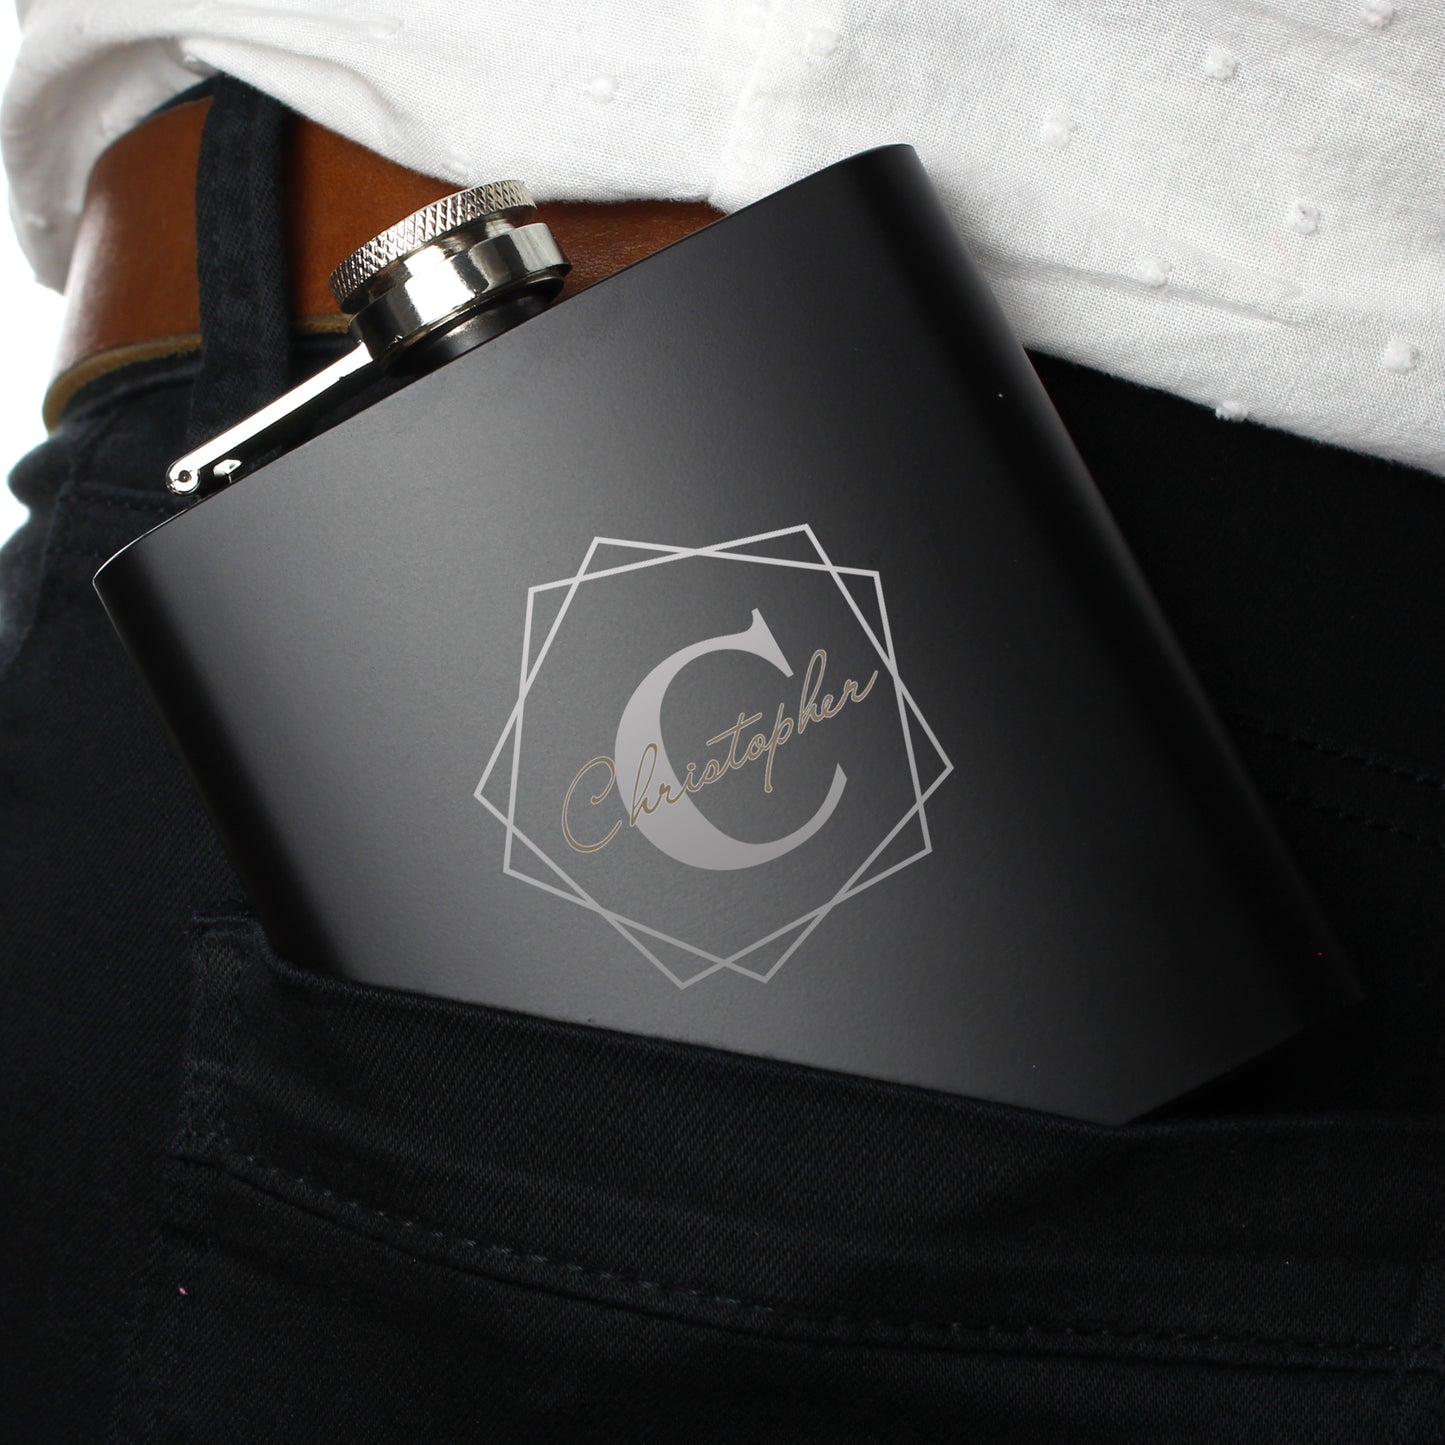 Personalised Geometric Initial Black Hip Flask - Personalise It!